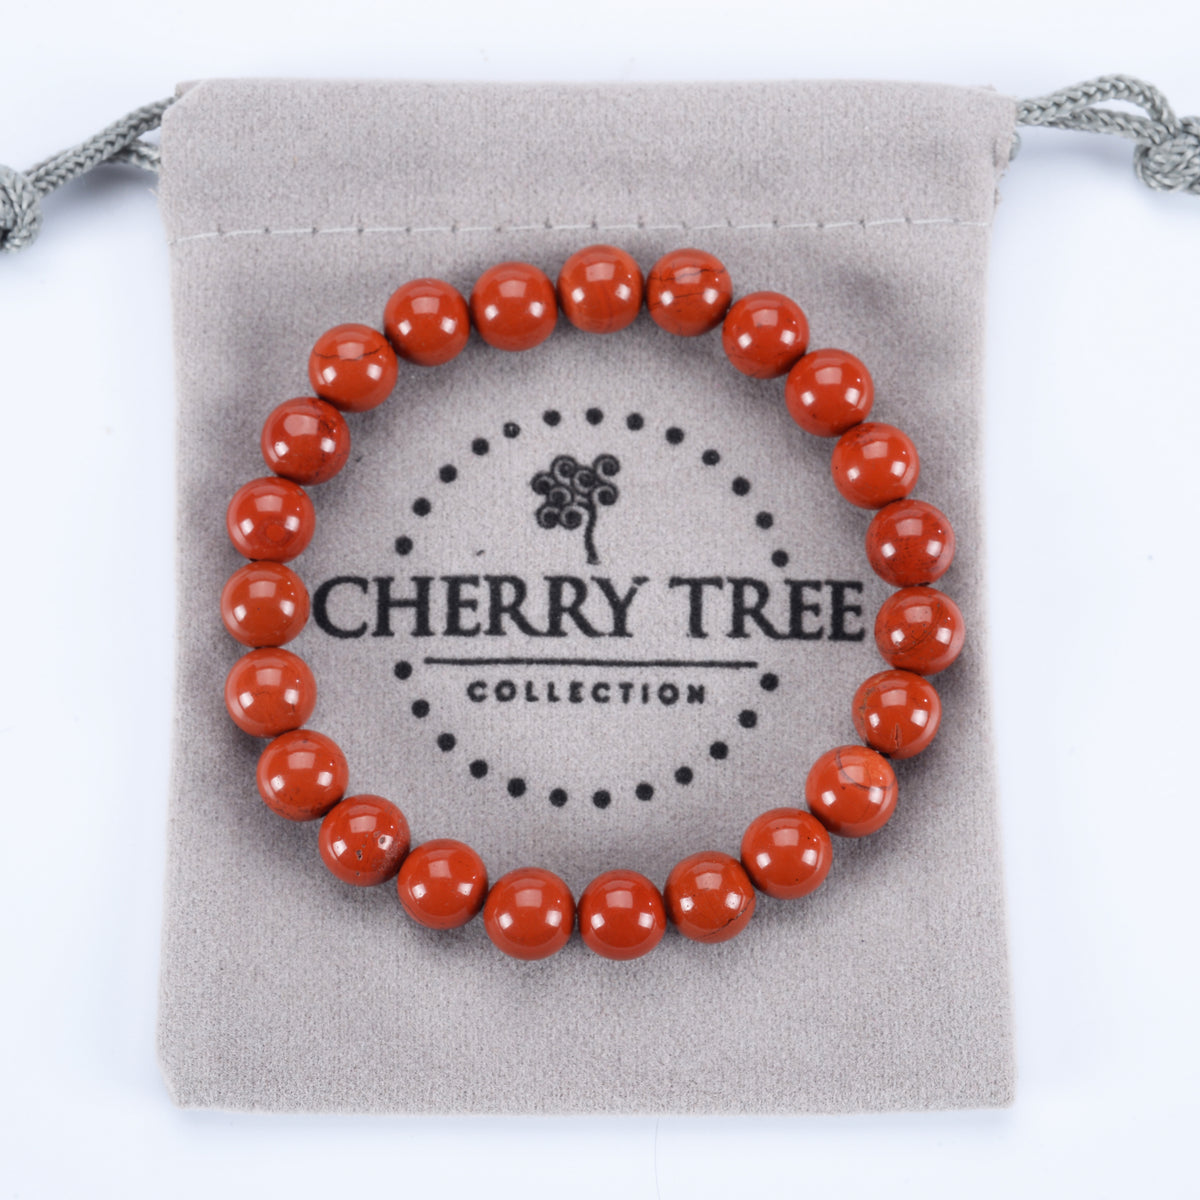 Stretch Bracelet | 8mm Beads (Red Jasper - Burnt Orange)